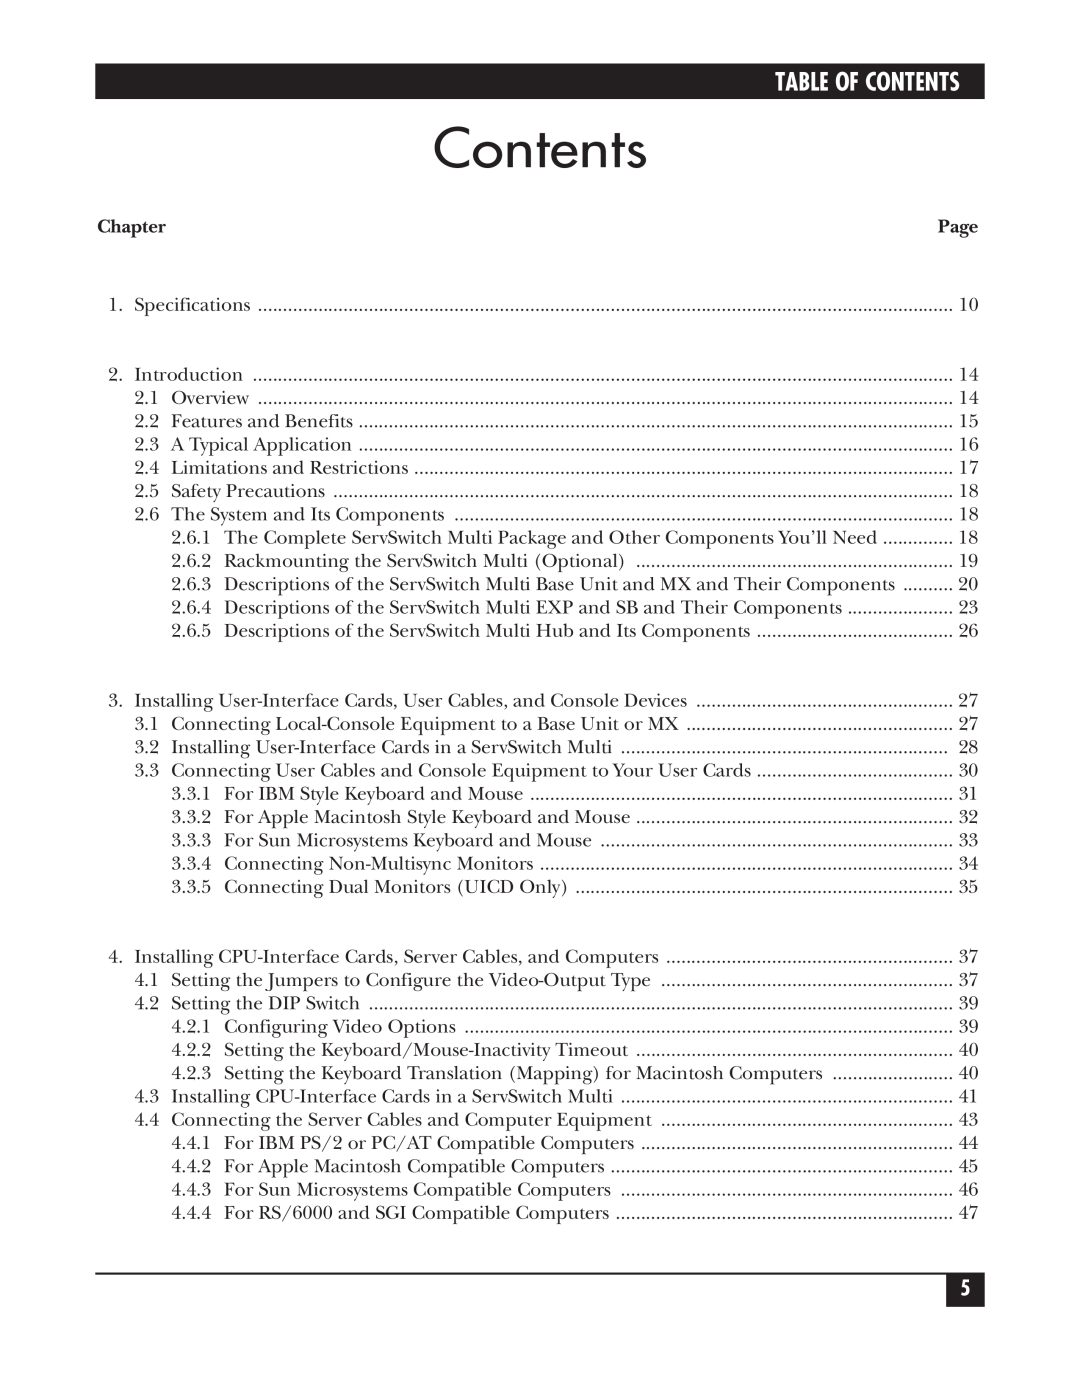 Black Box KV162A manual Contents, Chapter 